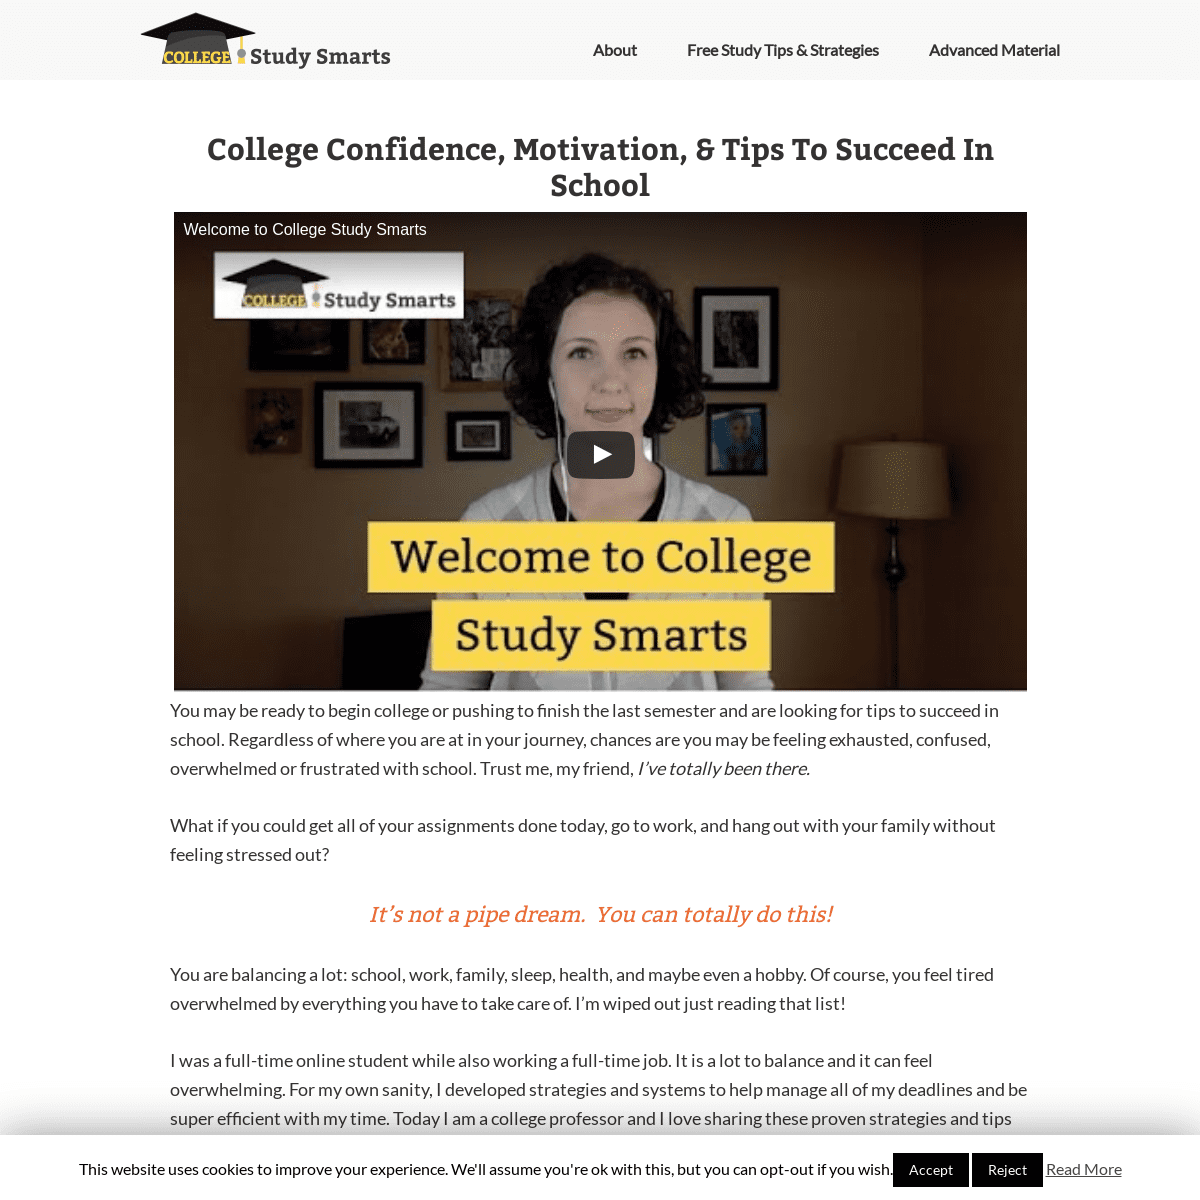 A complete backup of collegestudysmarts.com